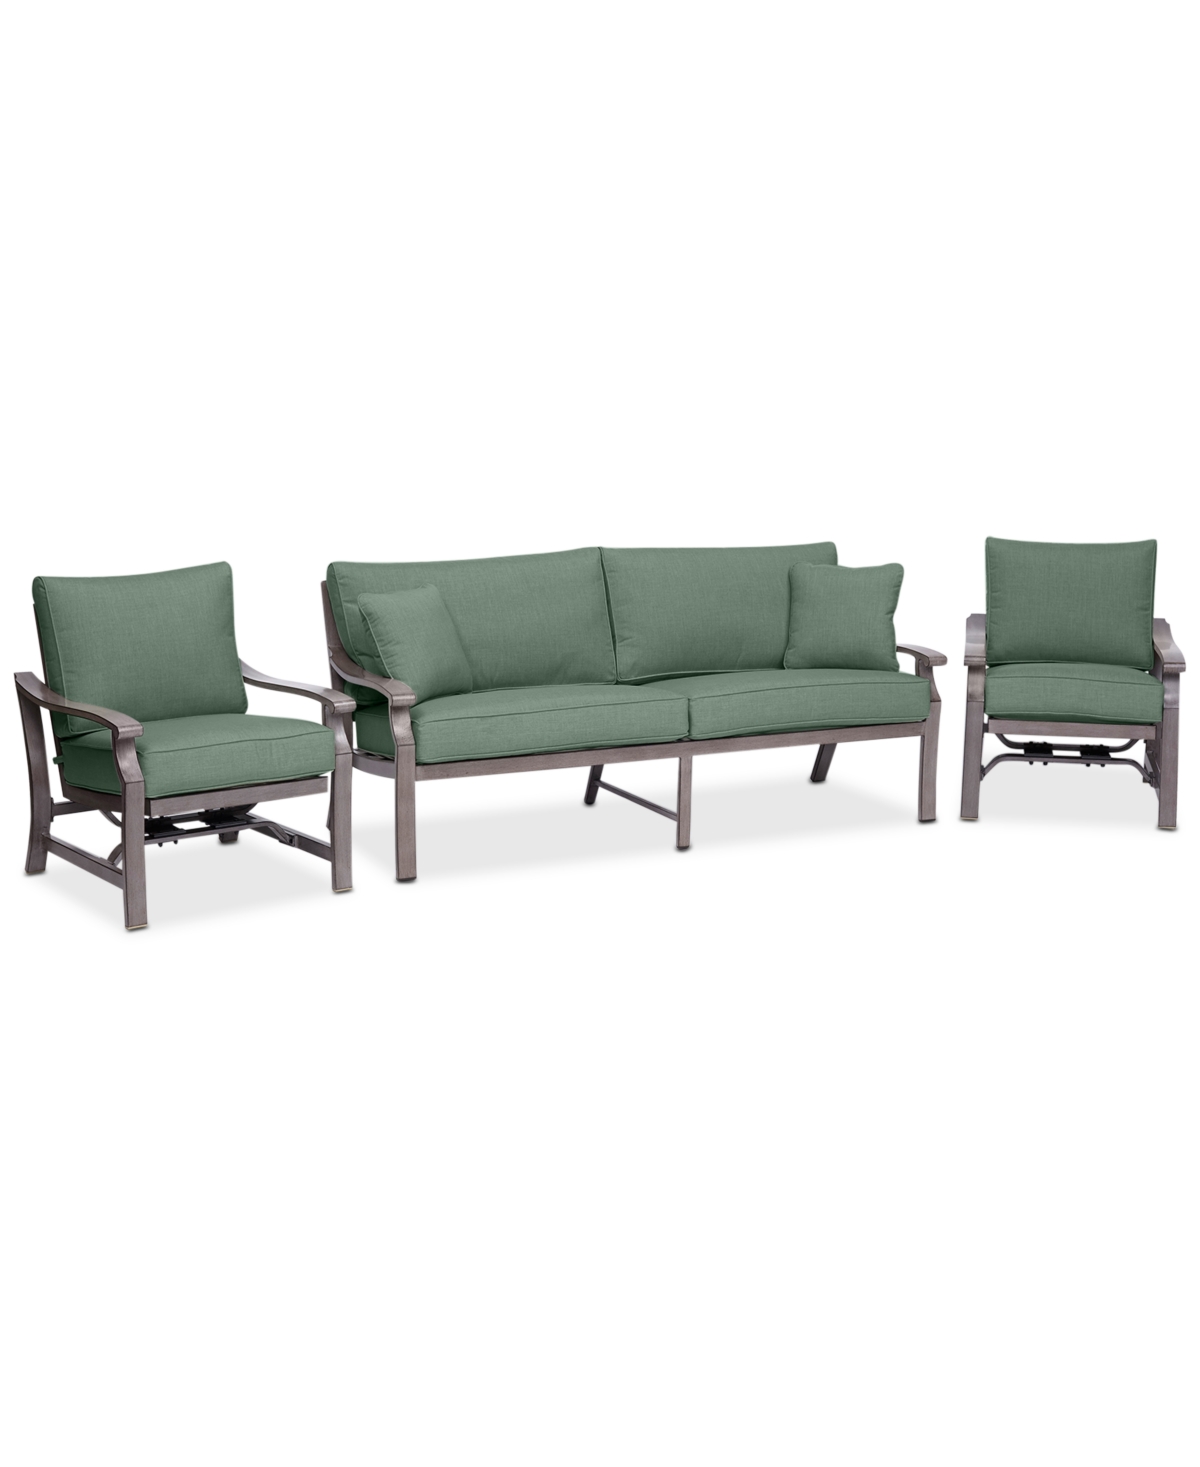 Shop Agio Tara Aluminum Outdoor 3-pc. Seating Set (1 Sofa & 2 Rocker Chairs), Created For Macy's In Outdura Grasshopper